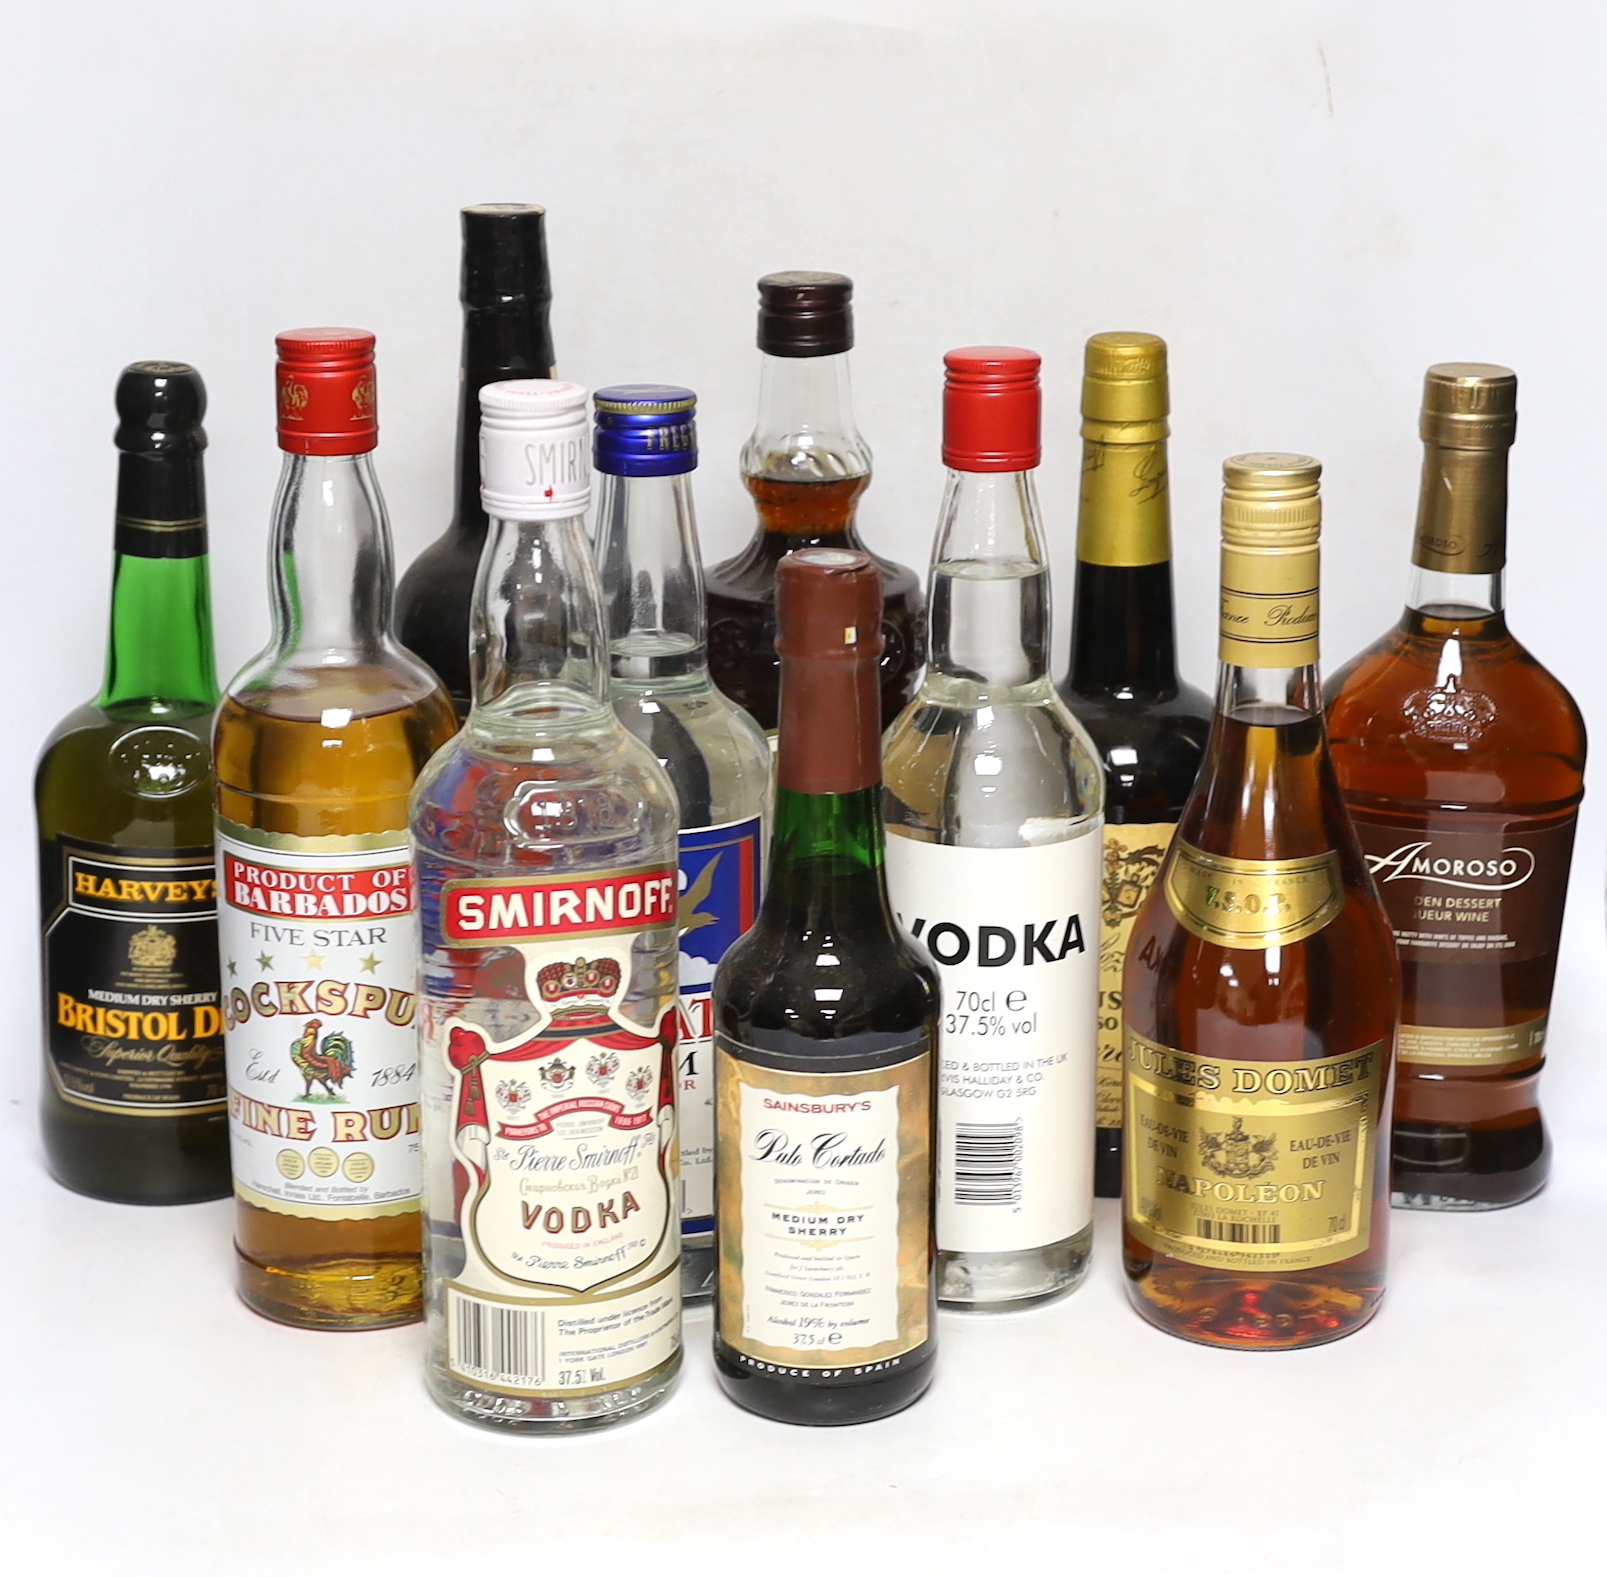 A selection of spirits, brandies and sherries to include Smirnoff, Jules Dumet, Cockspur etc